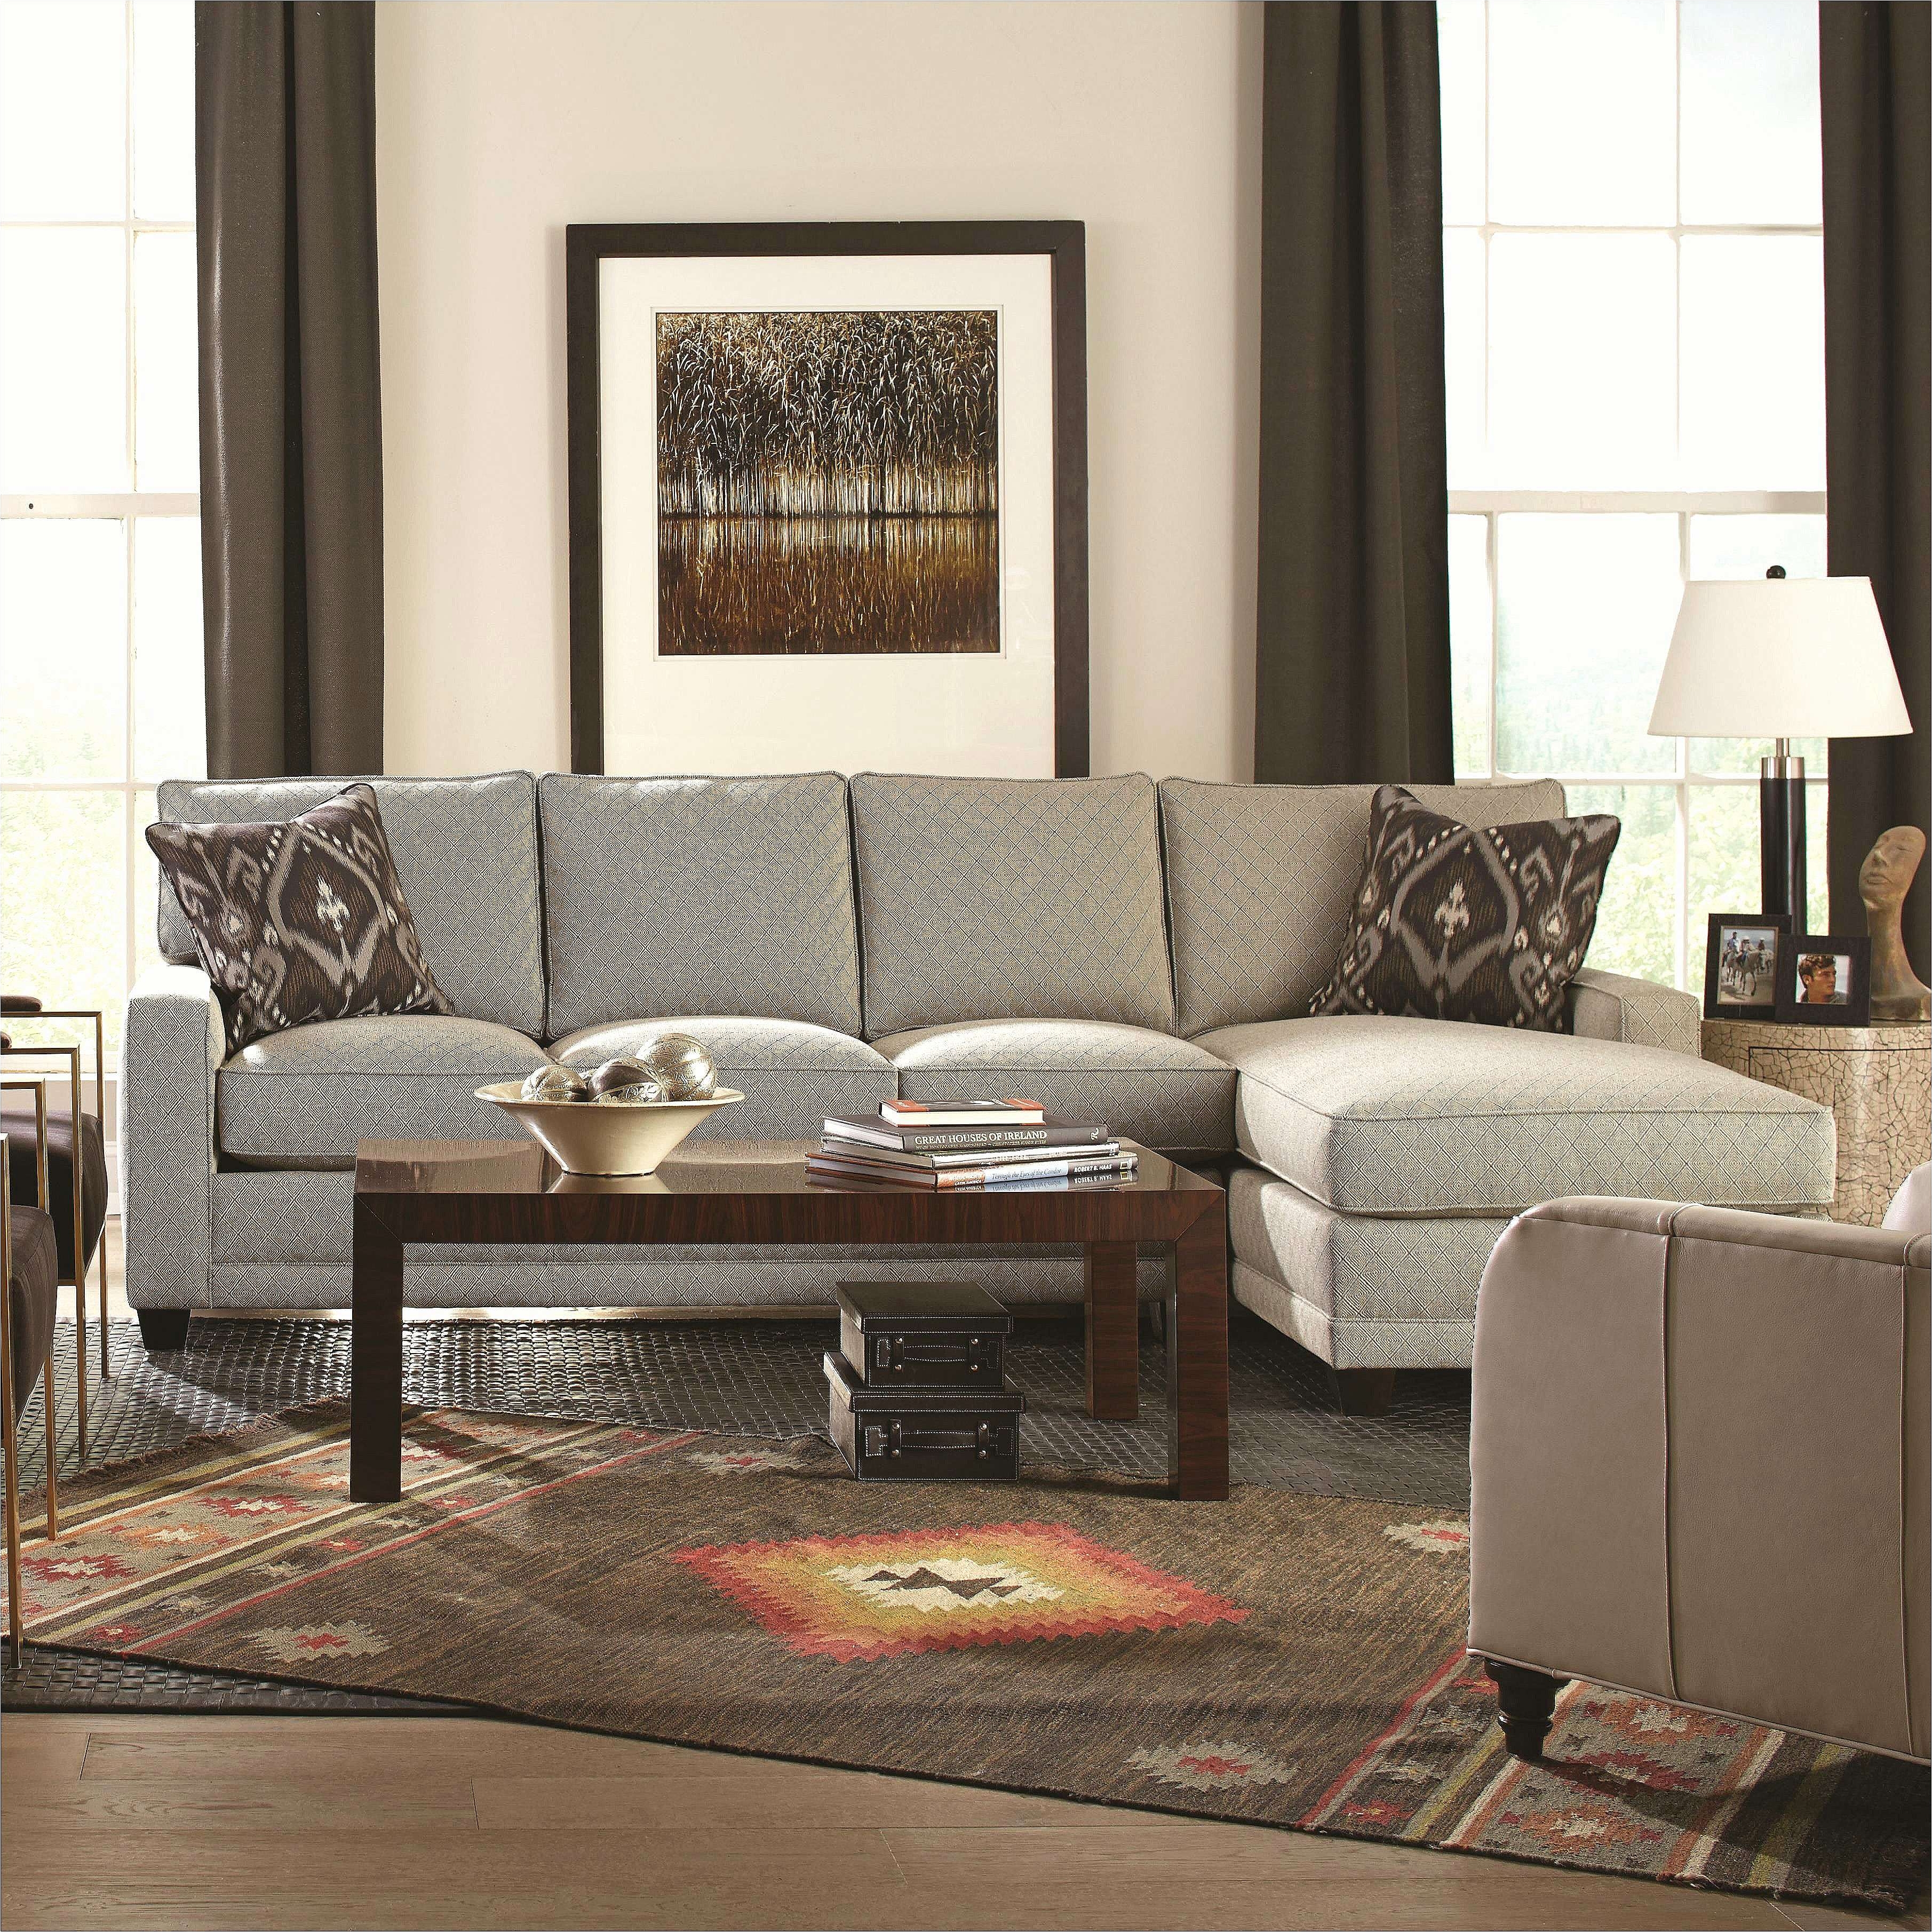 modern bedroom decor inspirational modern living room furniture new gunstige sofa macys furniture 0d